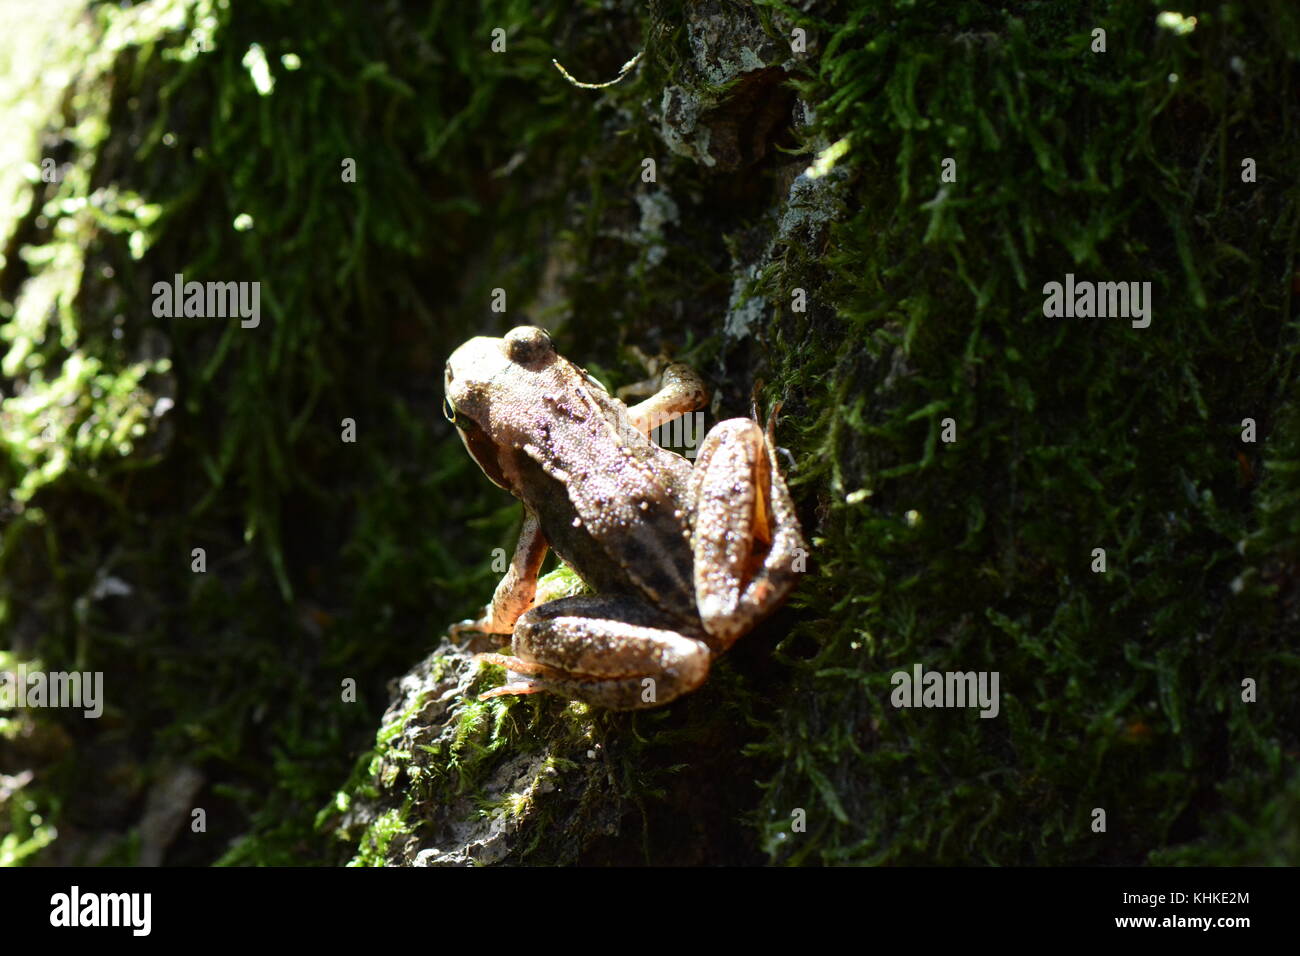 Common european frog on moss Stock Photo